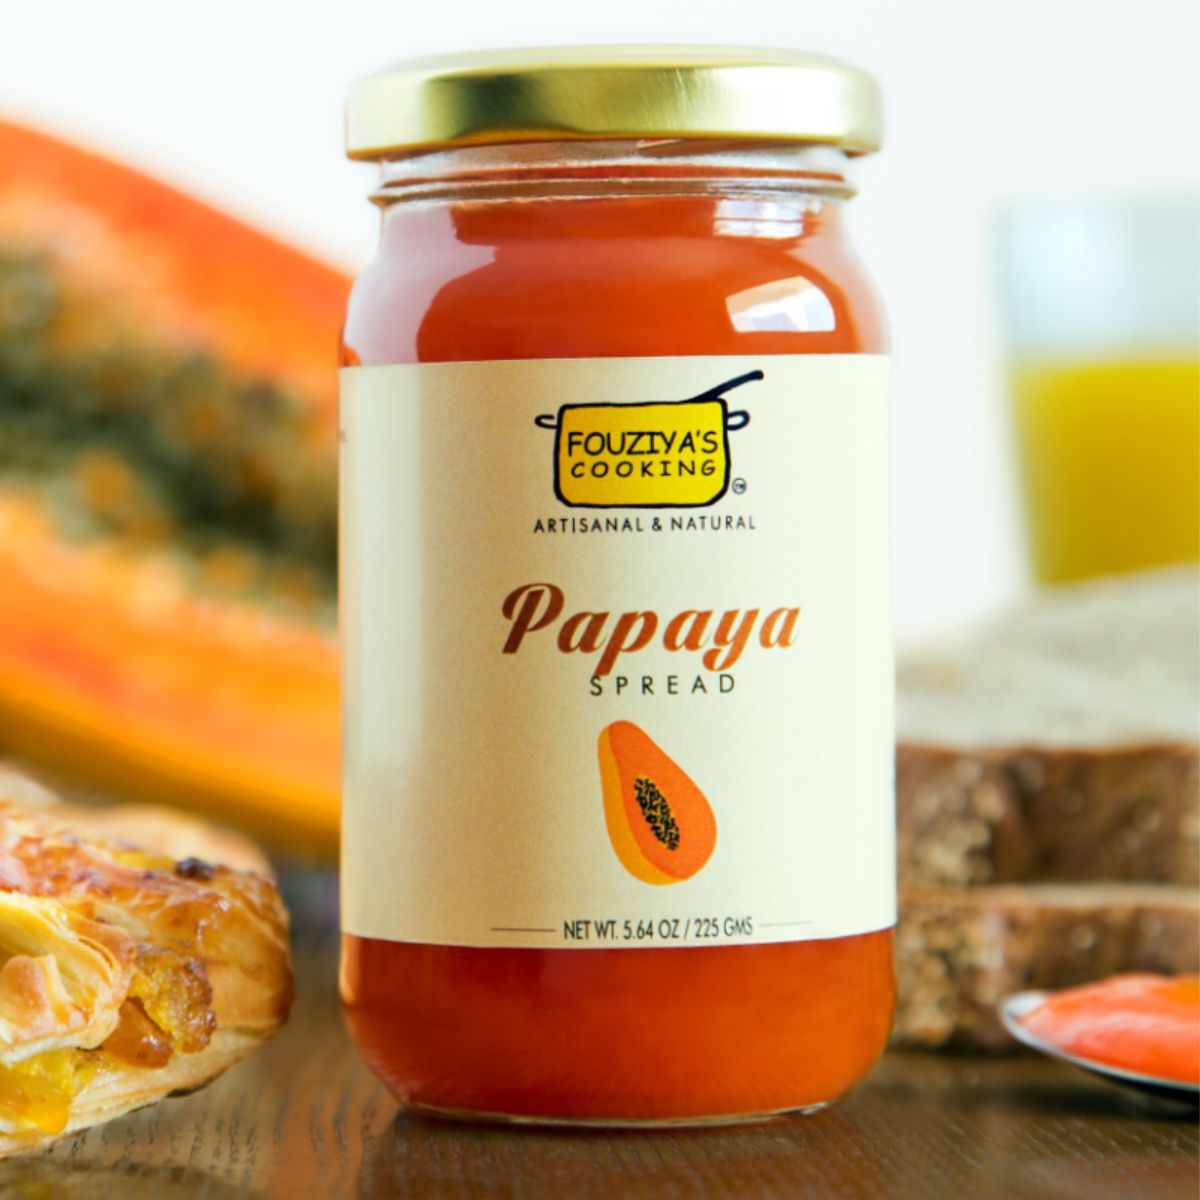 Fouziya's Papaya Spread